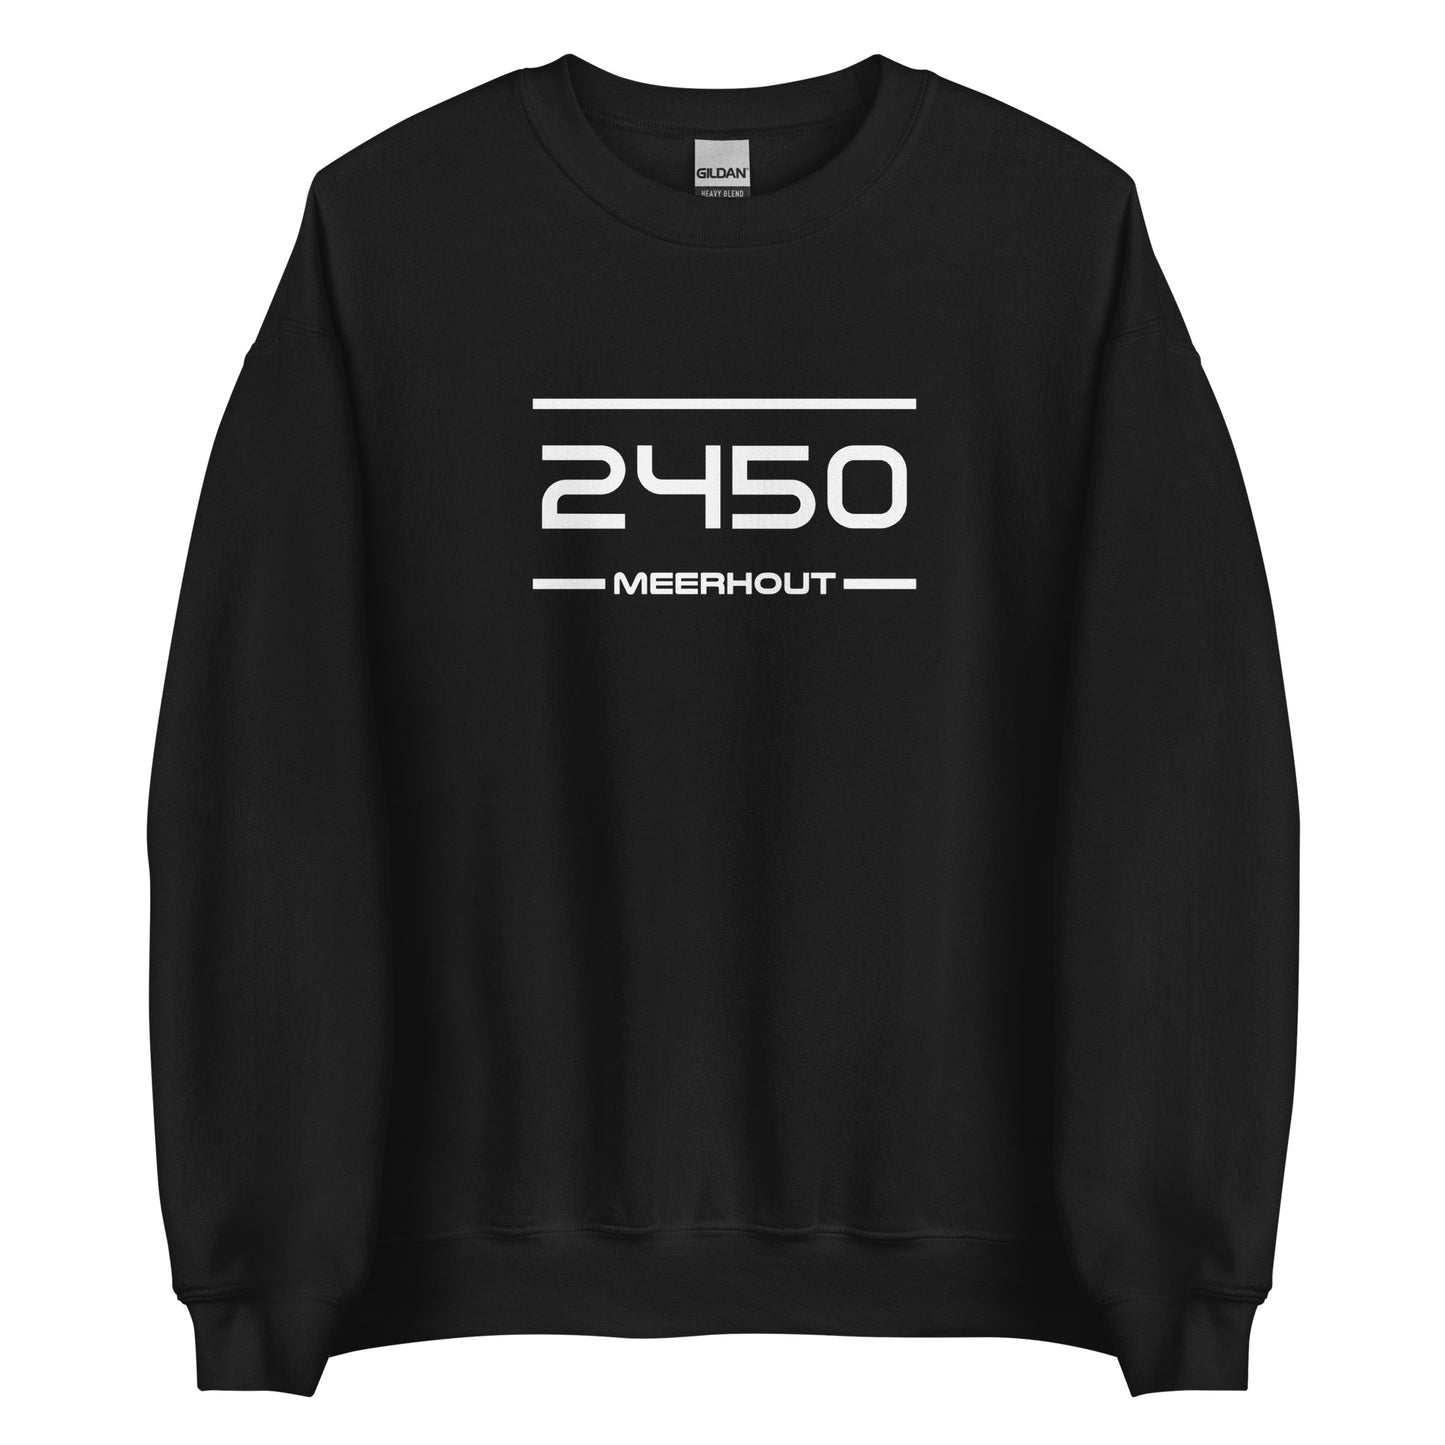 Sweater - 2450 - Meerhout (M/V)